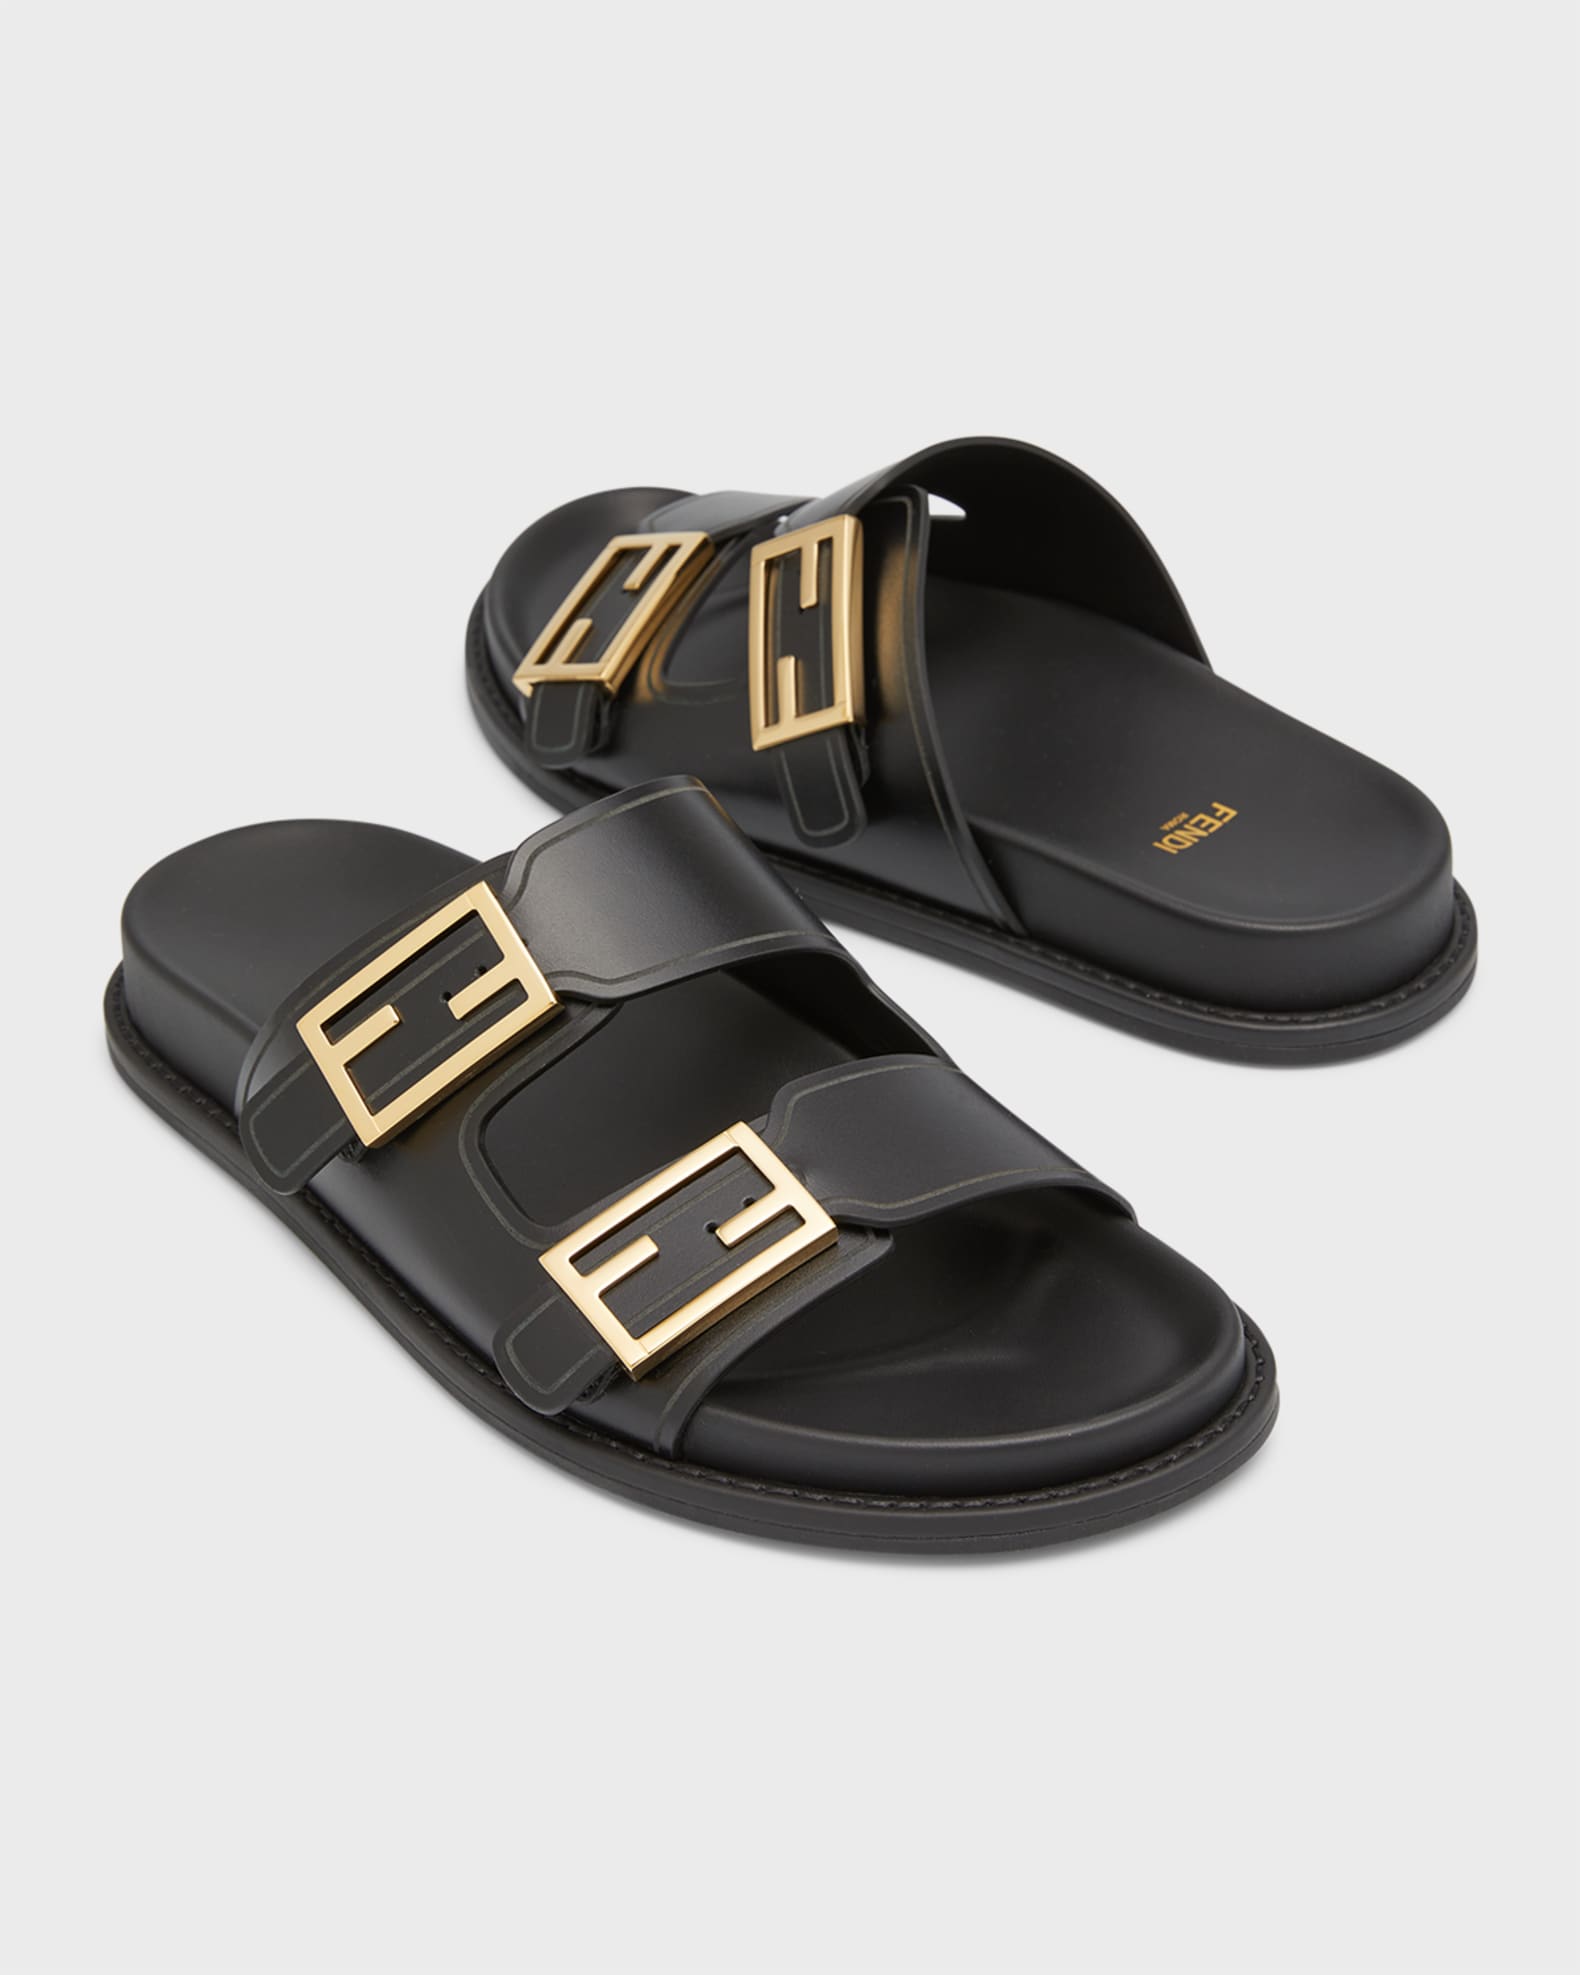 Fendi F Buckle Leather Slide Sandals | Neiman Marcus